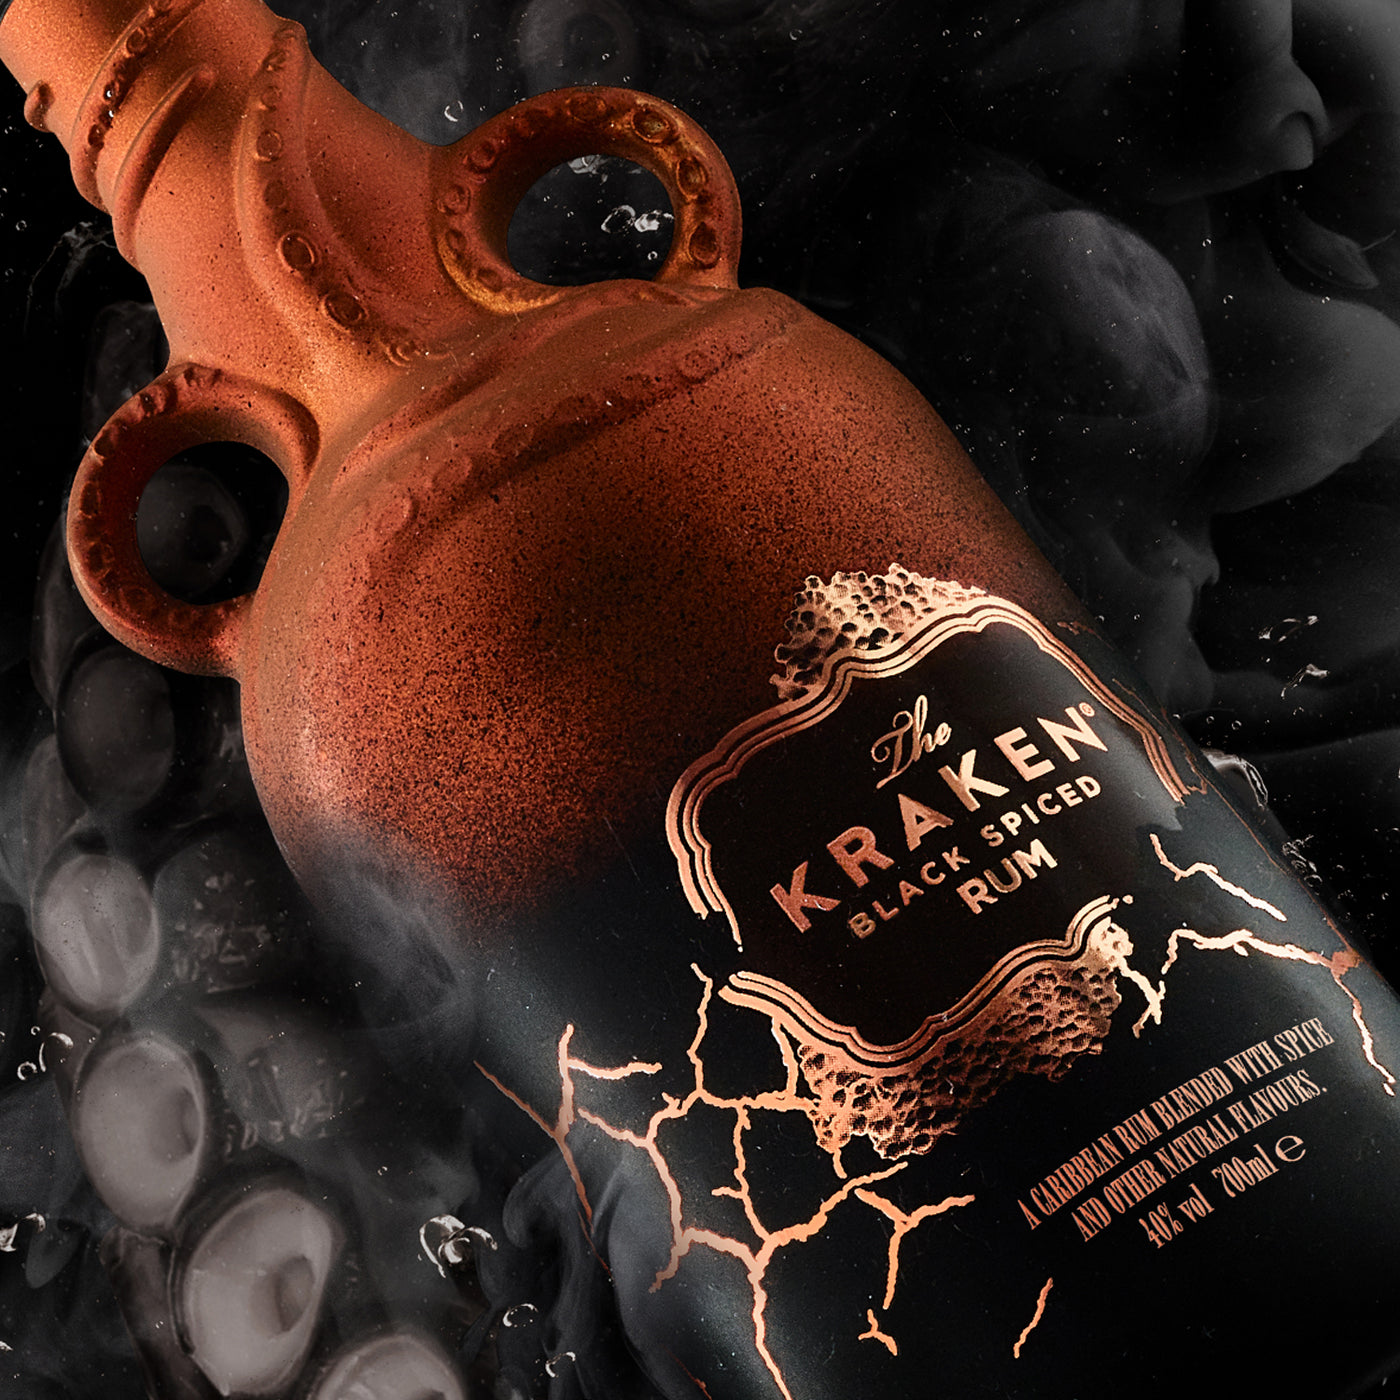 Kraken Black Spiced Rum Limited Edition 2022 Unknown Deep Copper Scar Secret Bottle Shop